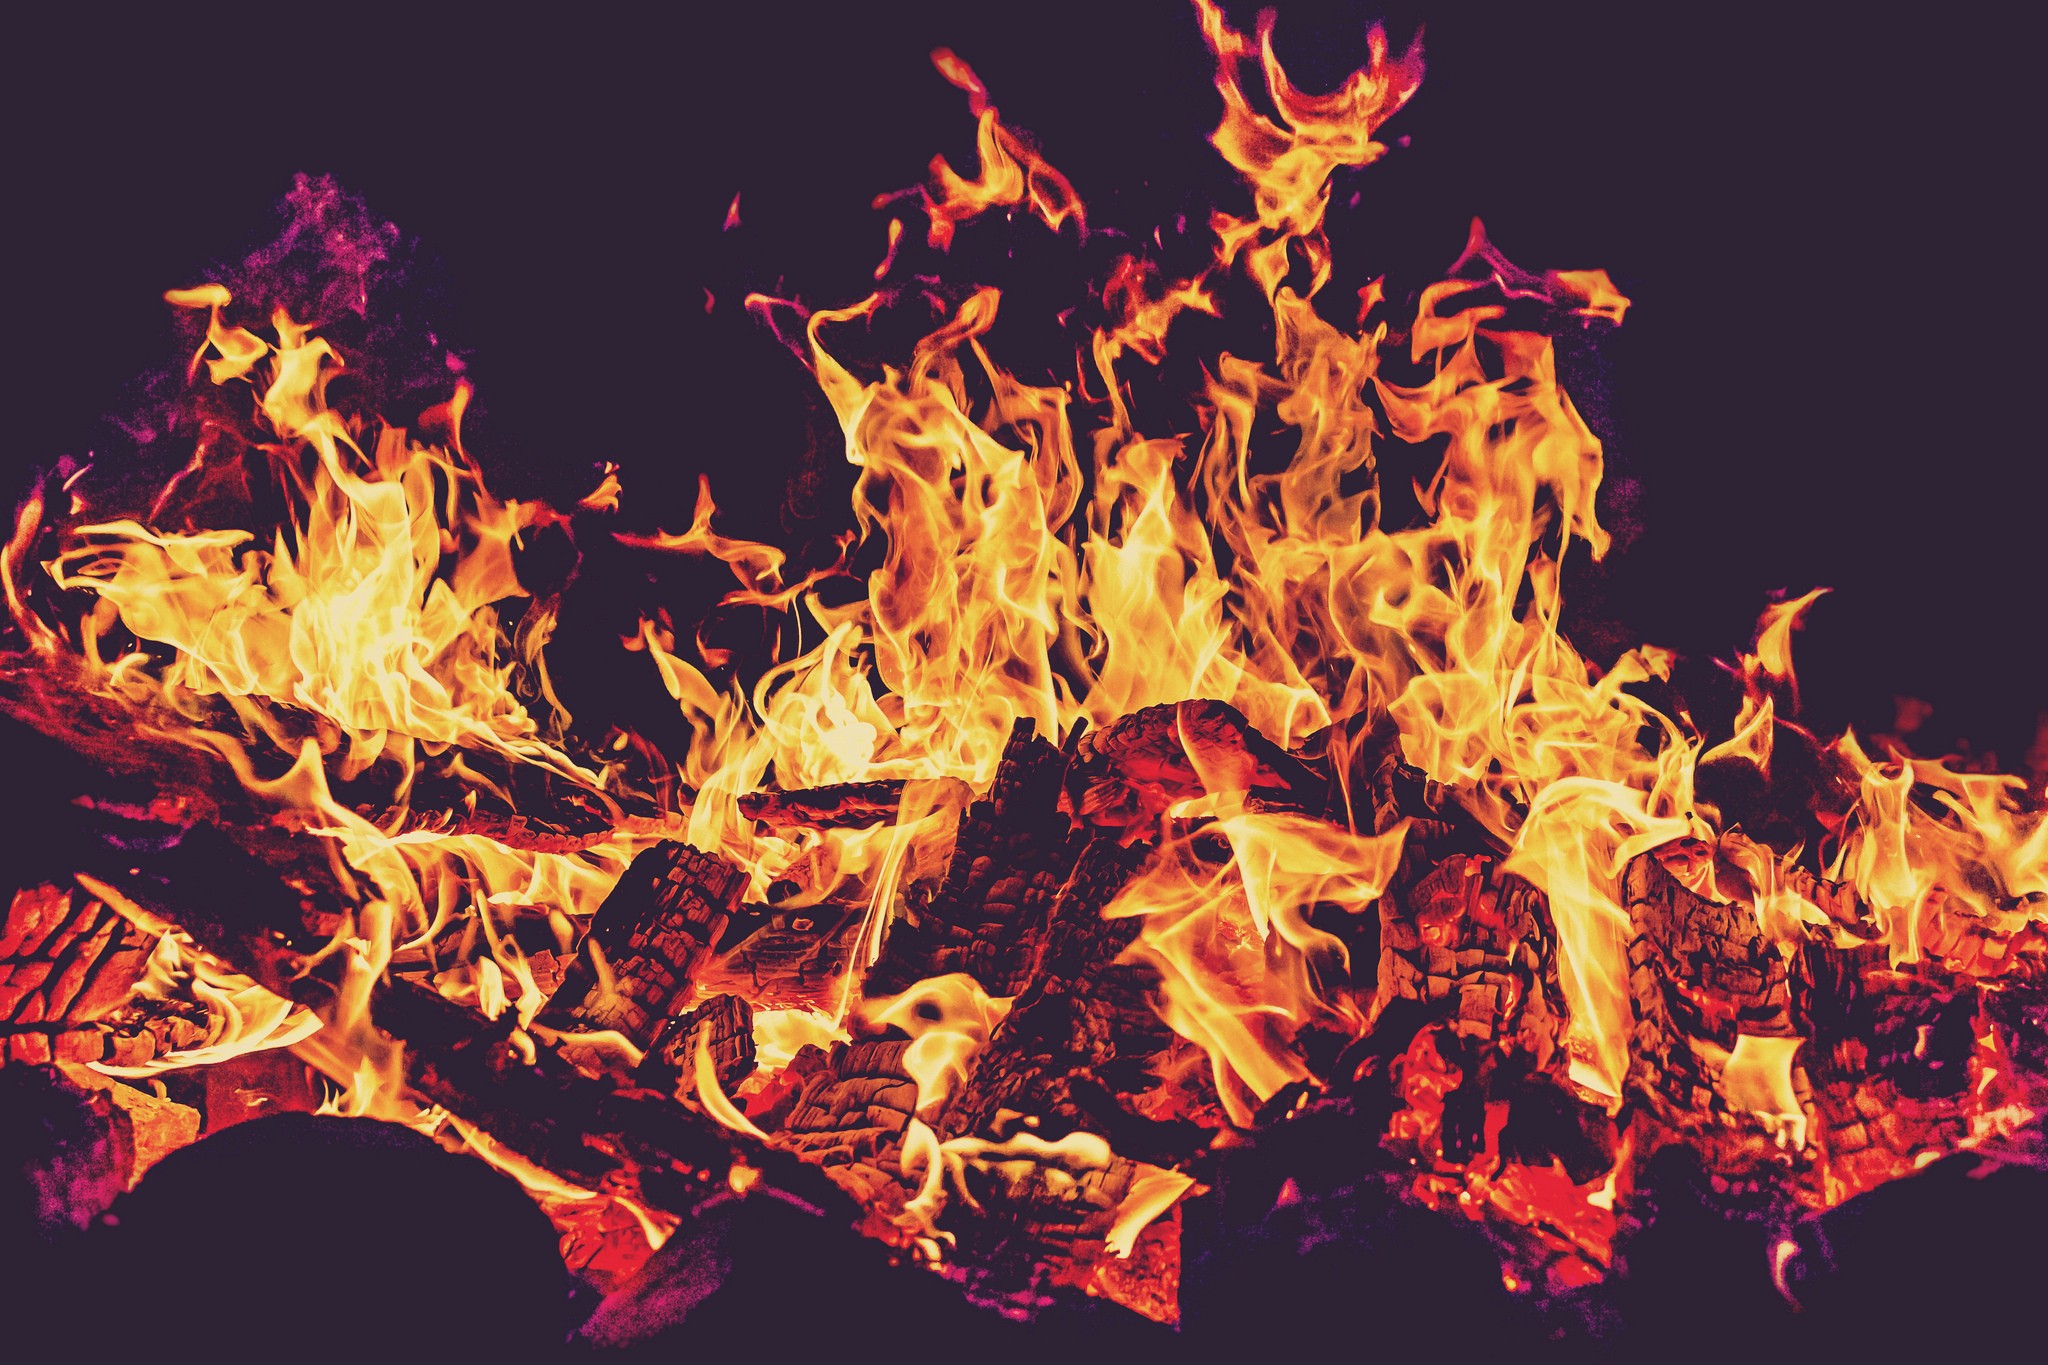 Fireplace Fire Burning Dark Red Embers Yellow Bonfires 2048x1365